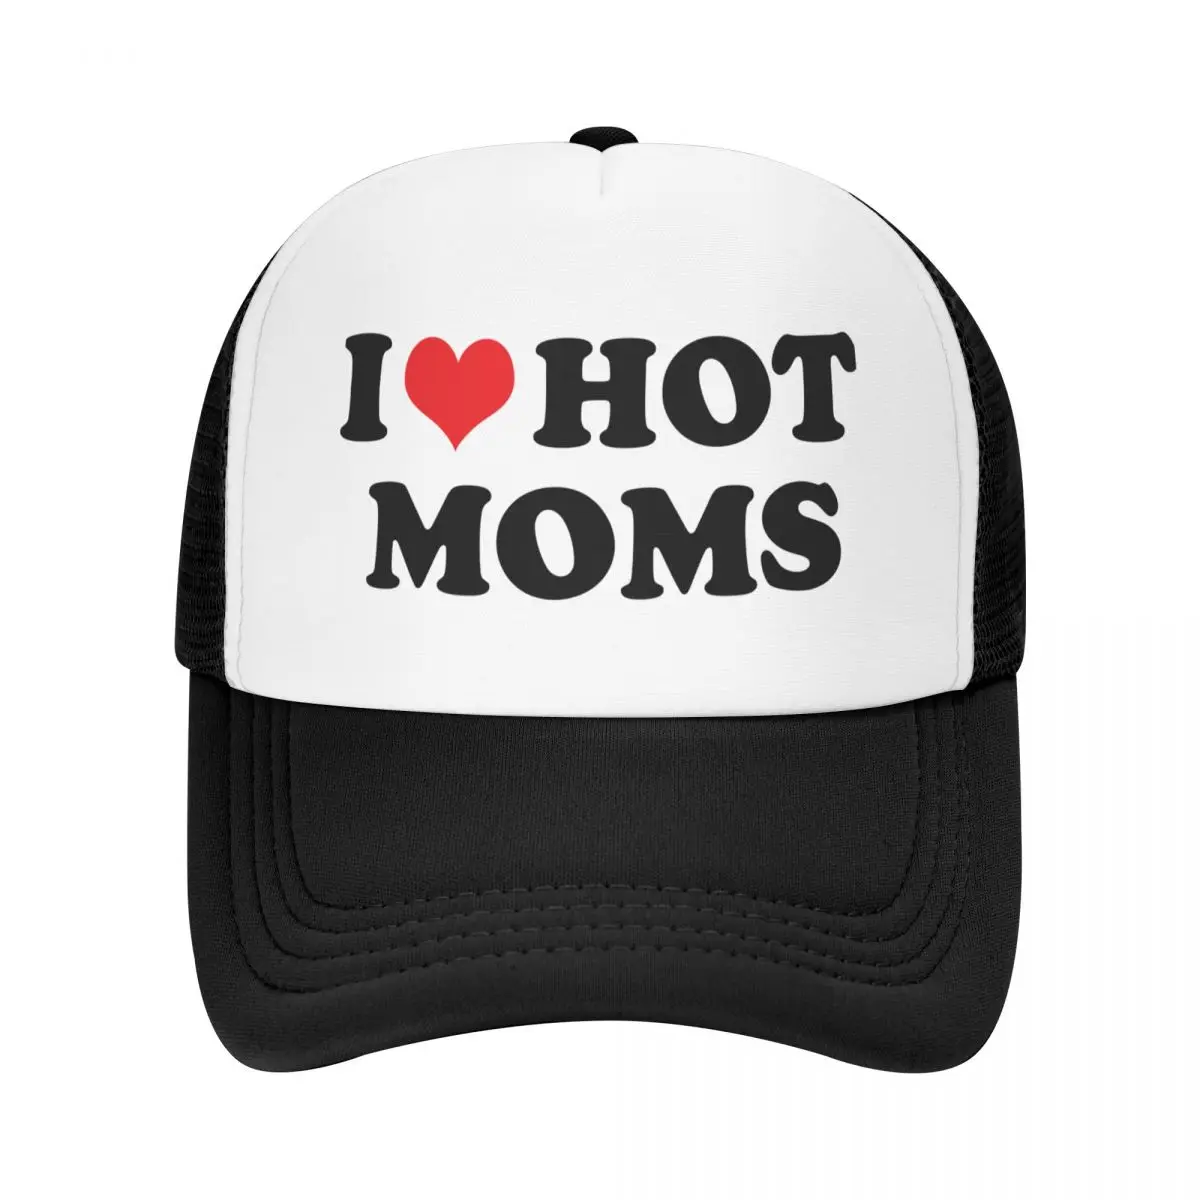 Cool I Love Hot Moms Trucker Hat Men Women Personalized Adjustable Unisex Baseball Cap Summer Hats Snapback Caps